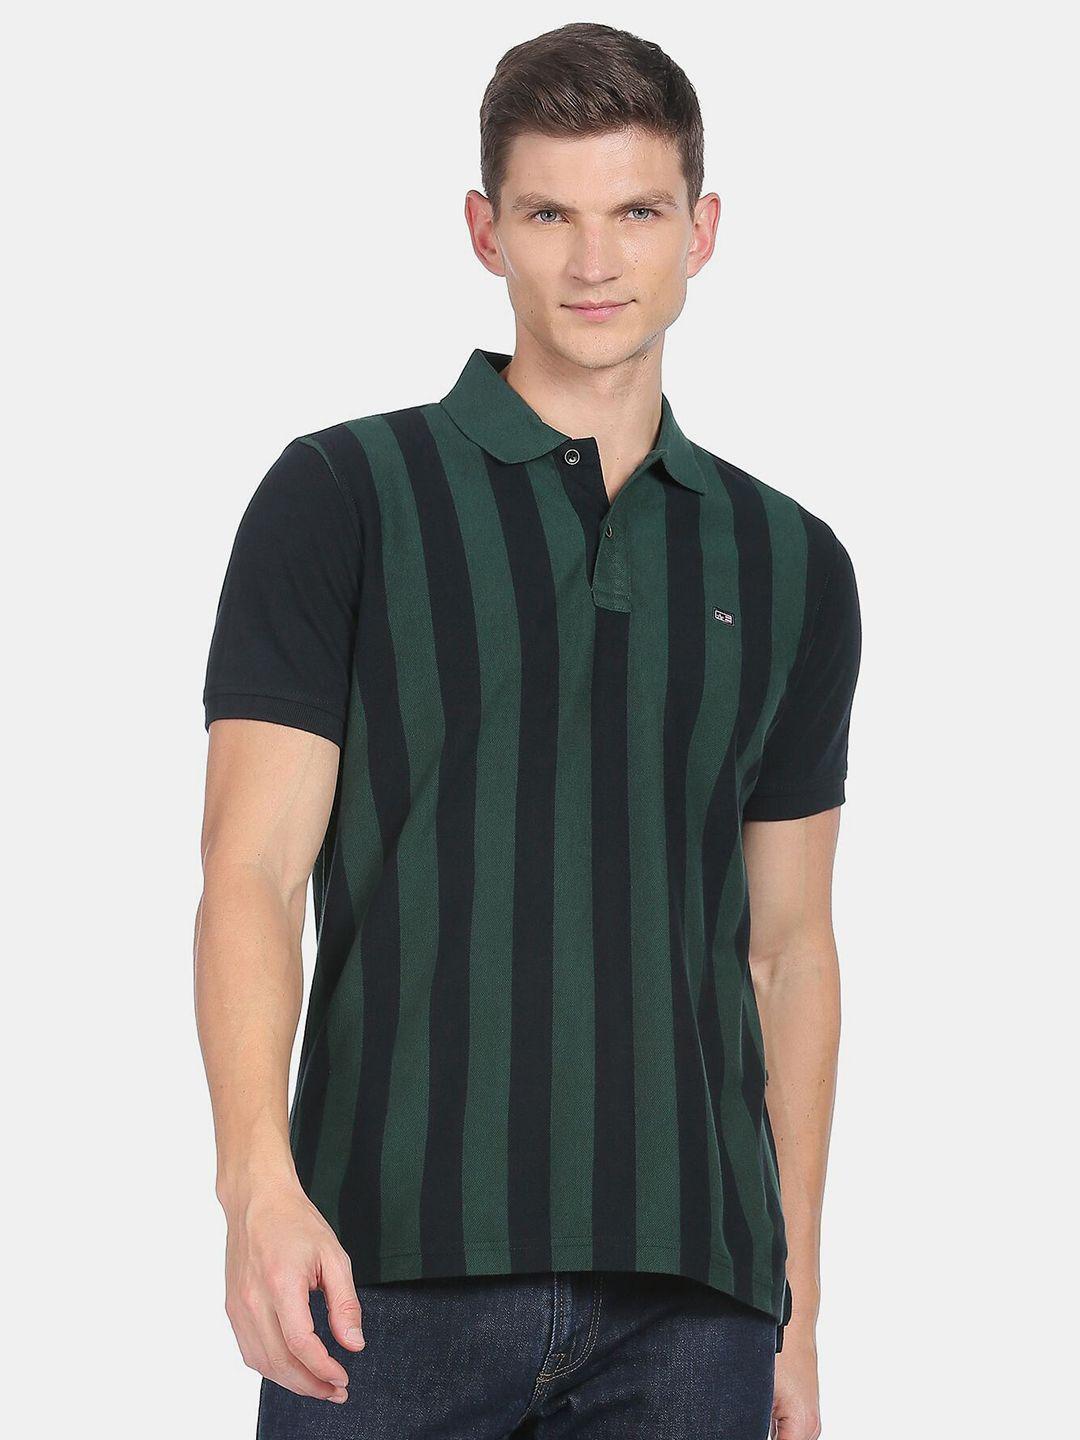 arrow sport men green & black striped polo collar cotton t-shirt